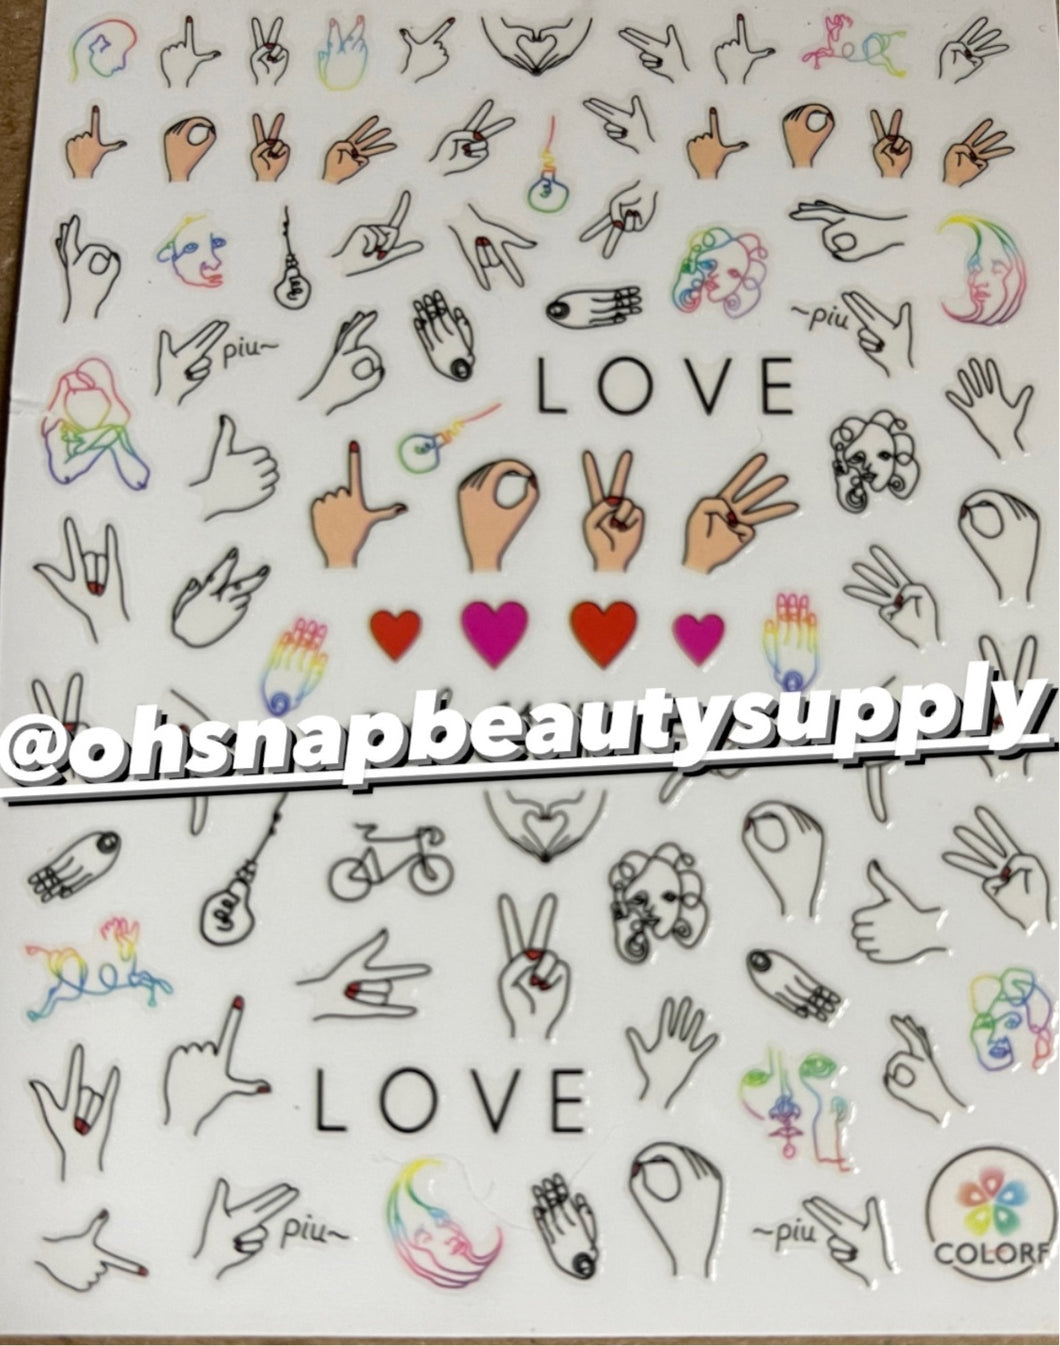 Sign language 🤟 (LOVE) CA 258 Sticker